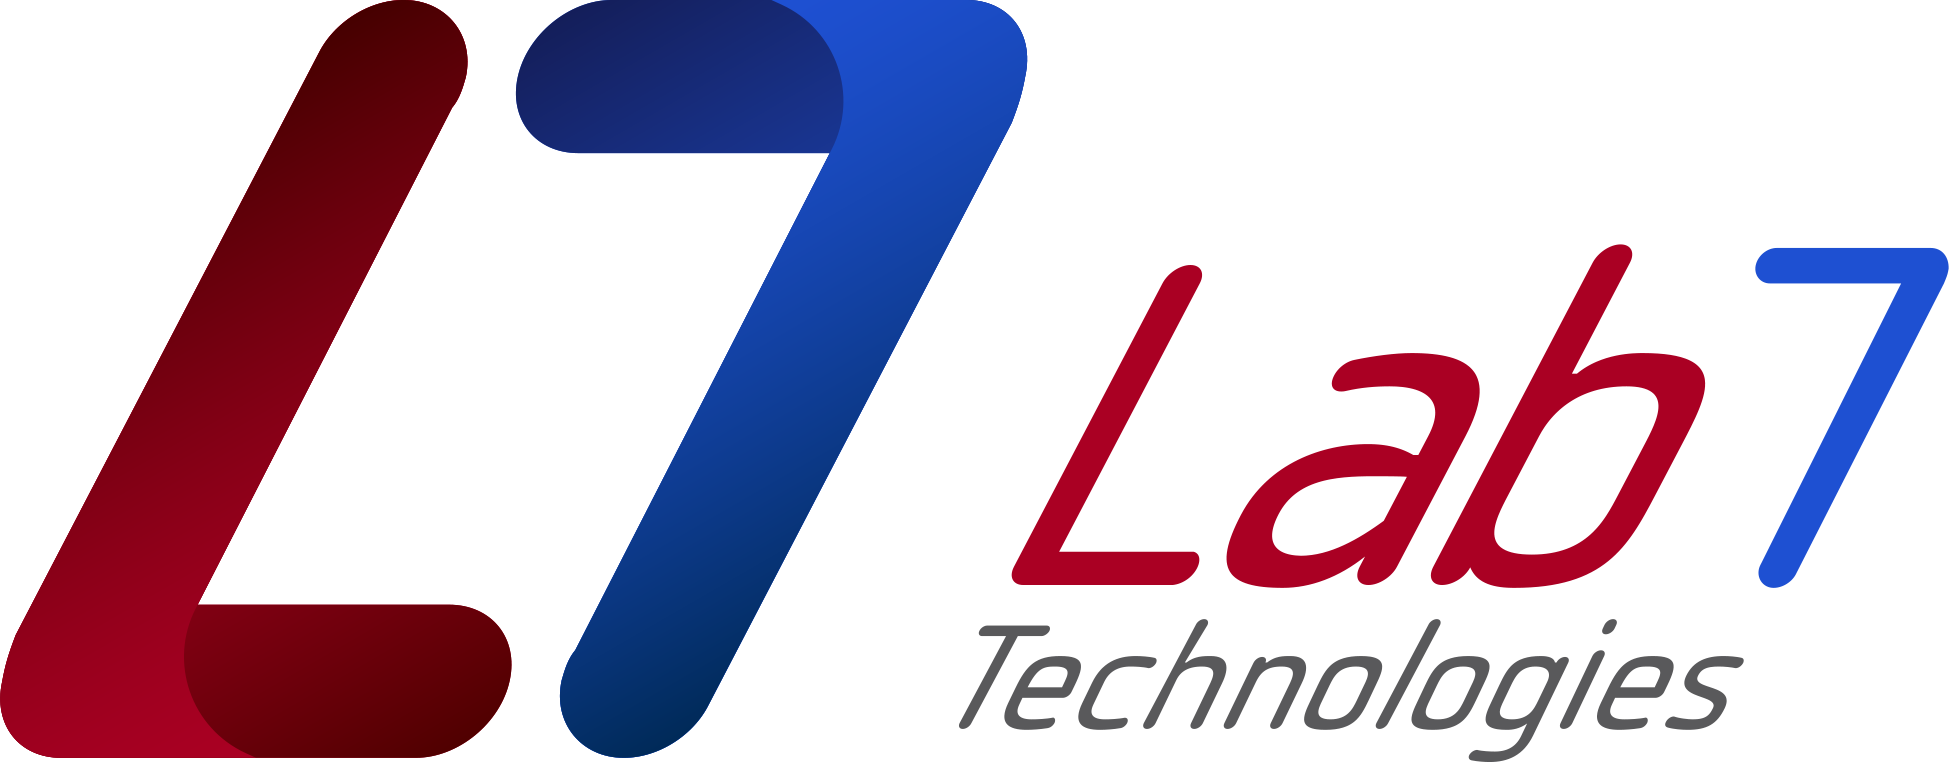 Lab-7-logo